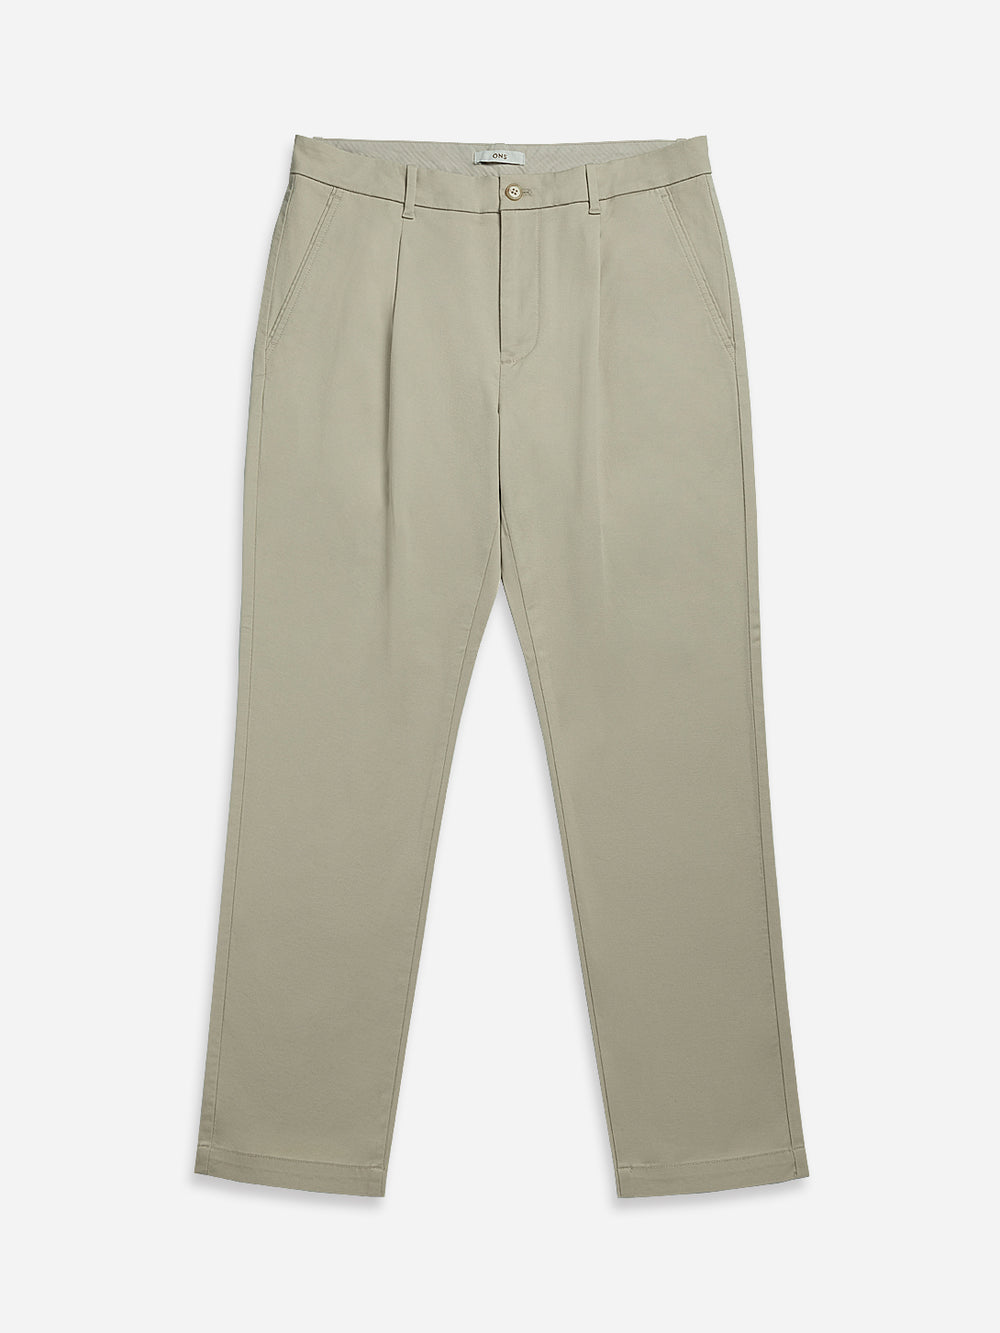 Buy Basics Dark Grey Tapered Fit Trousers for Men Online @ Tata CLiQ